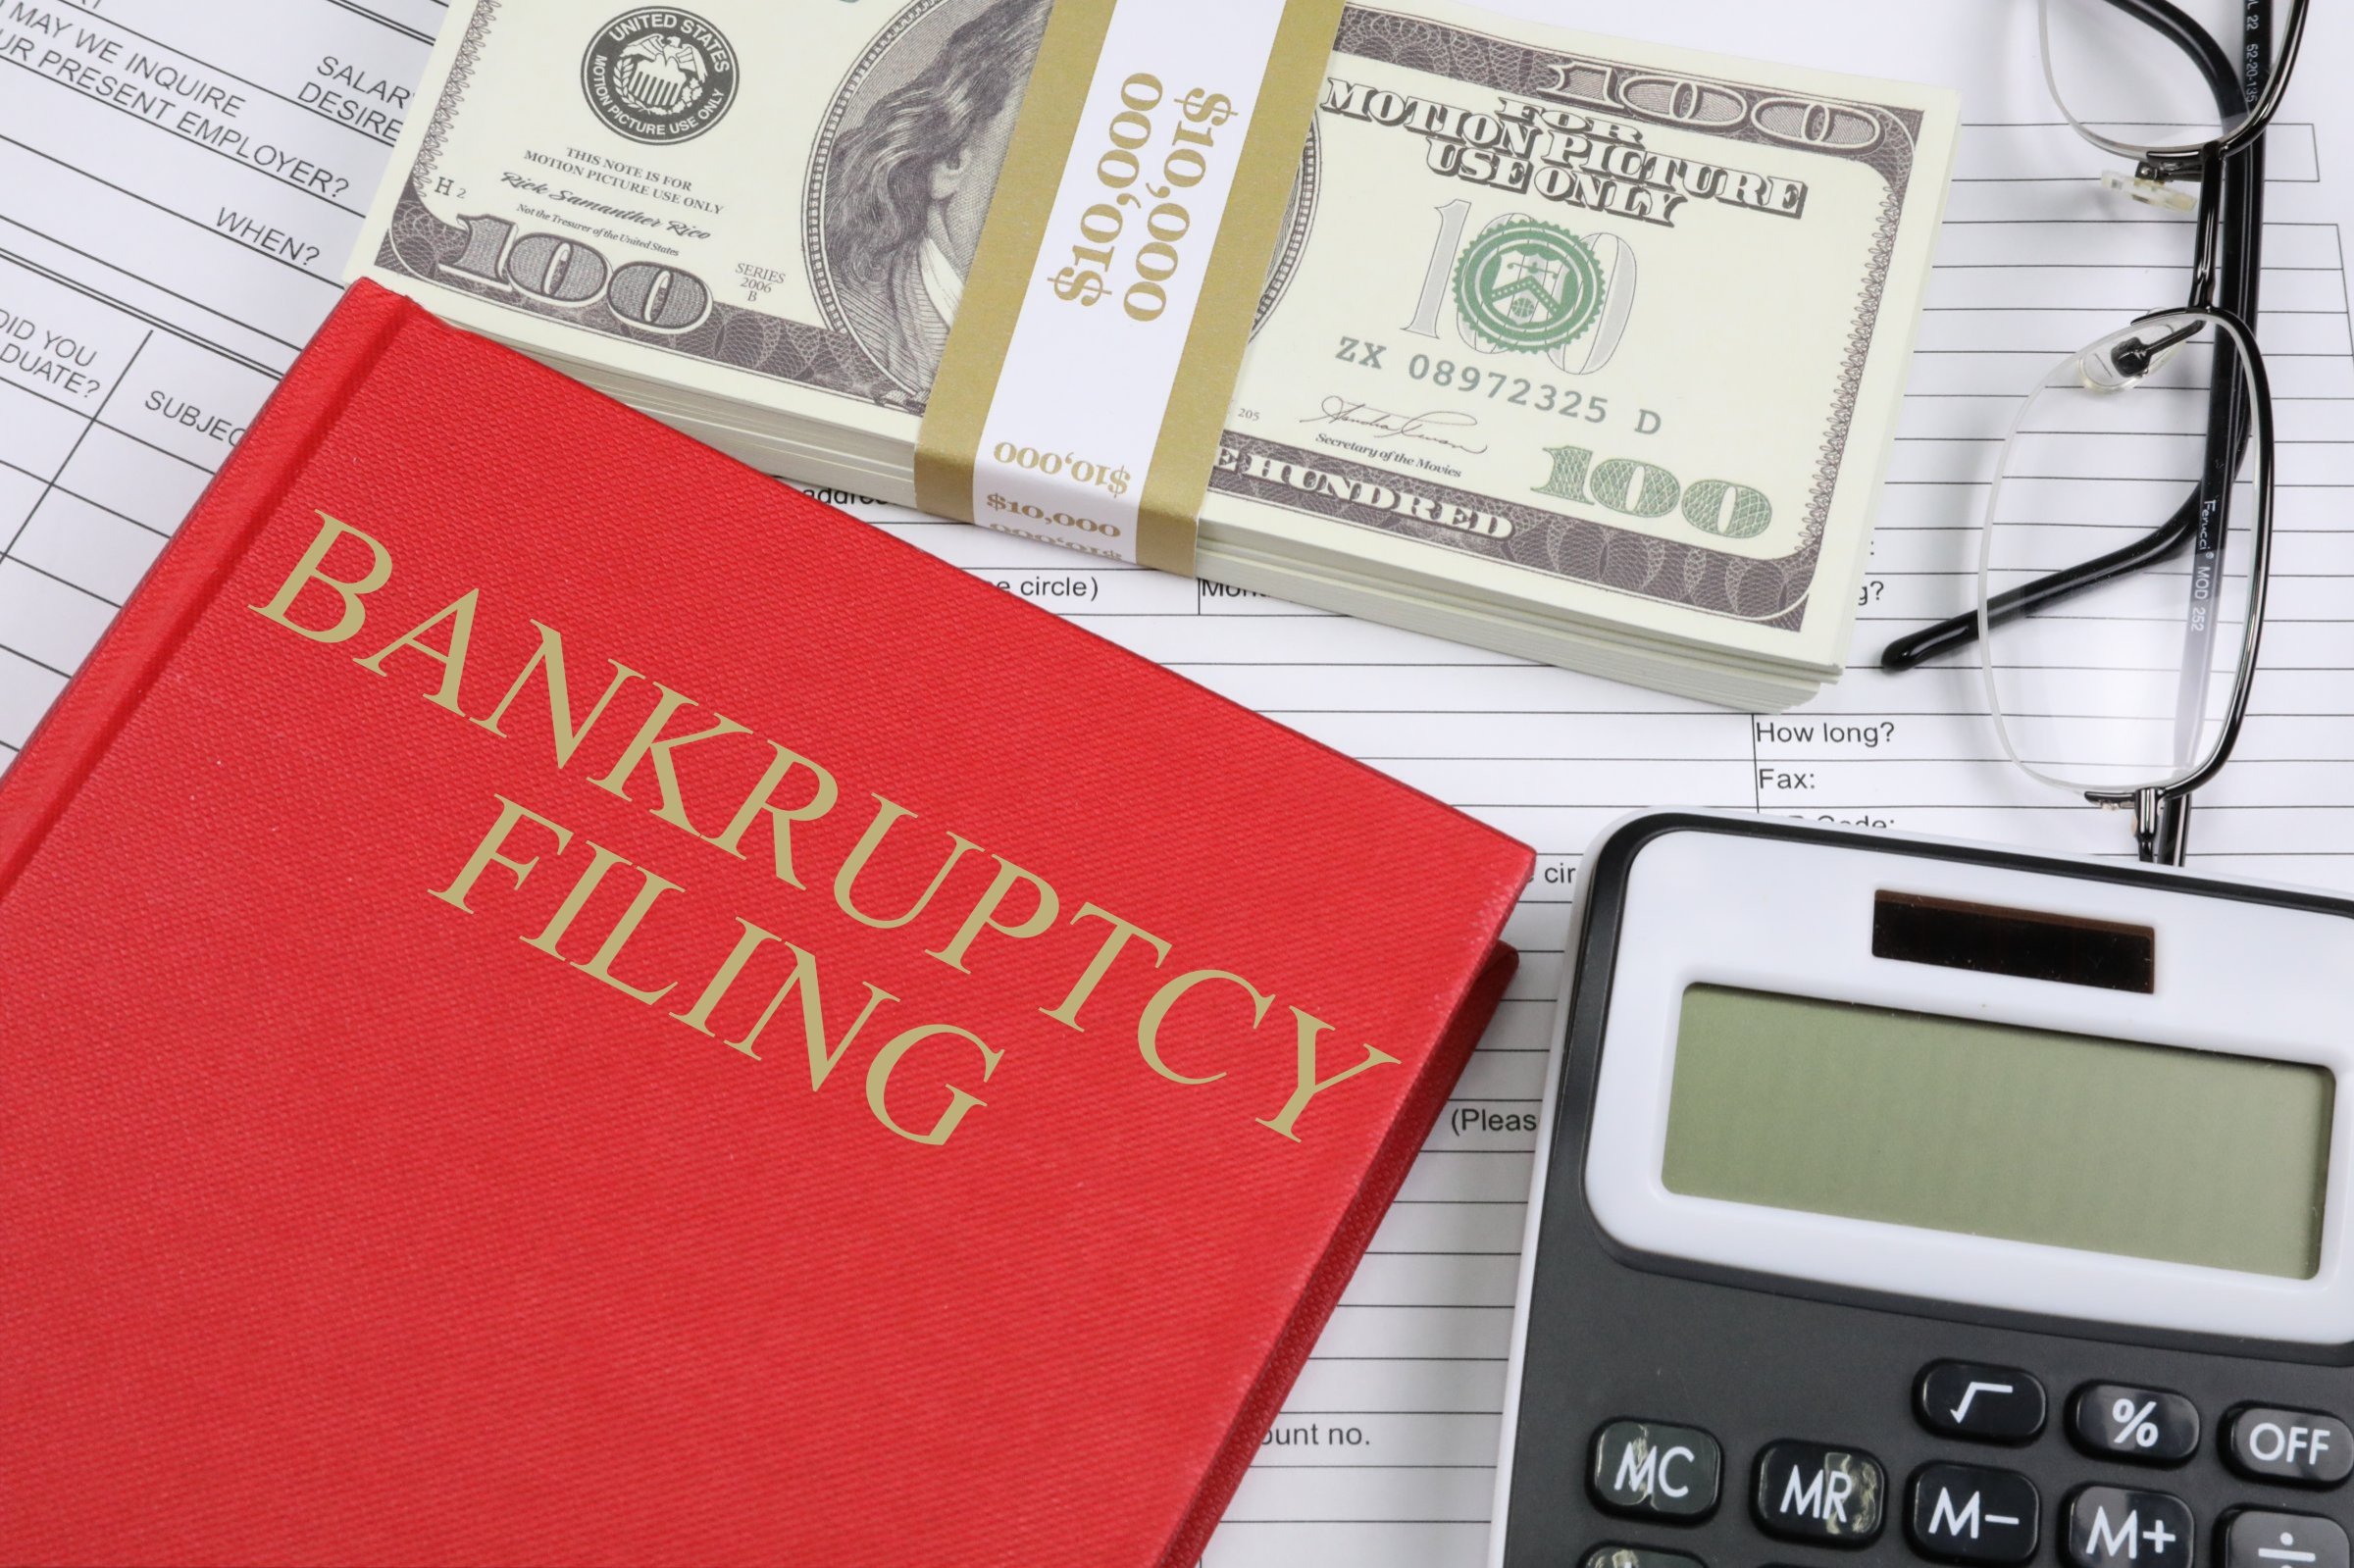 bankruptcy filing